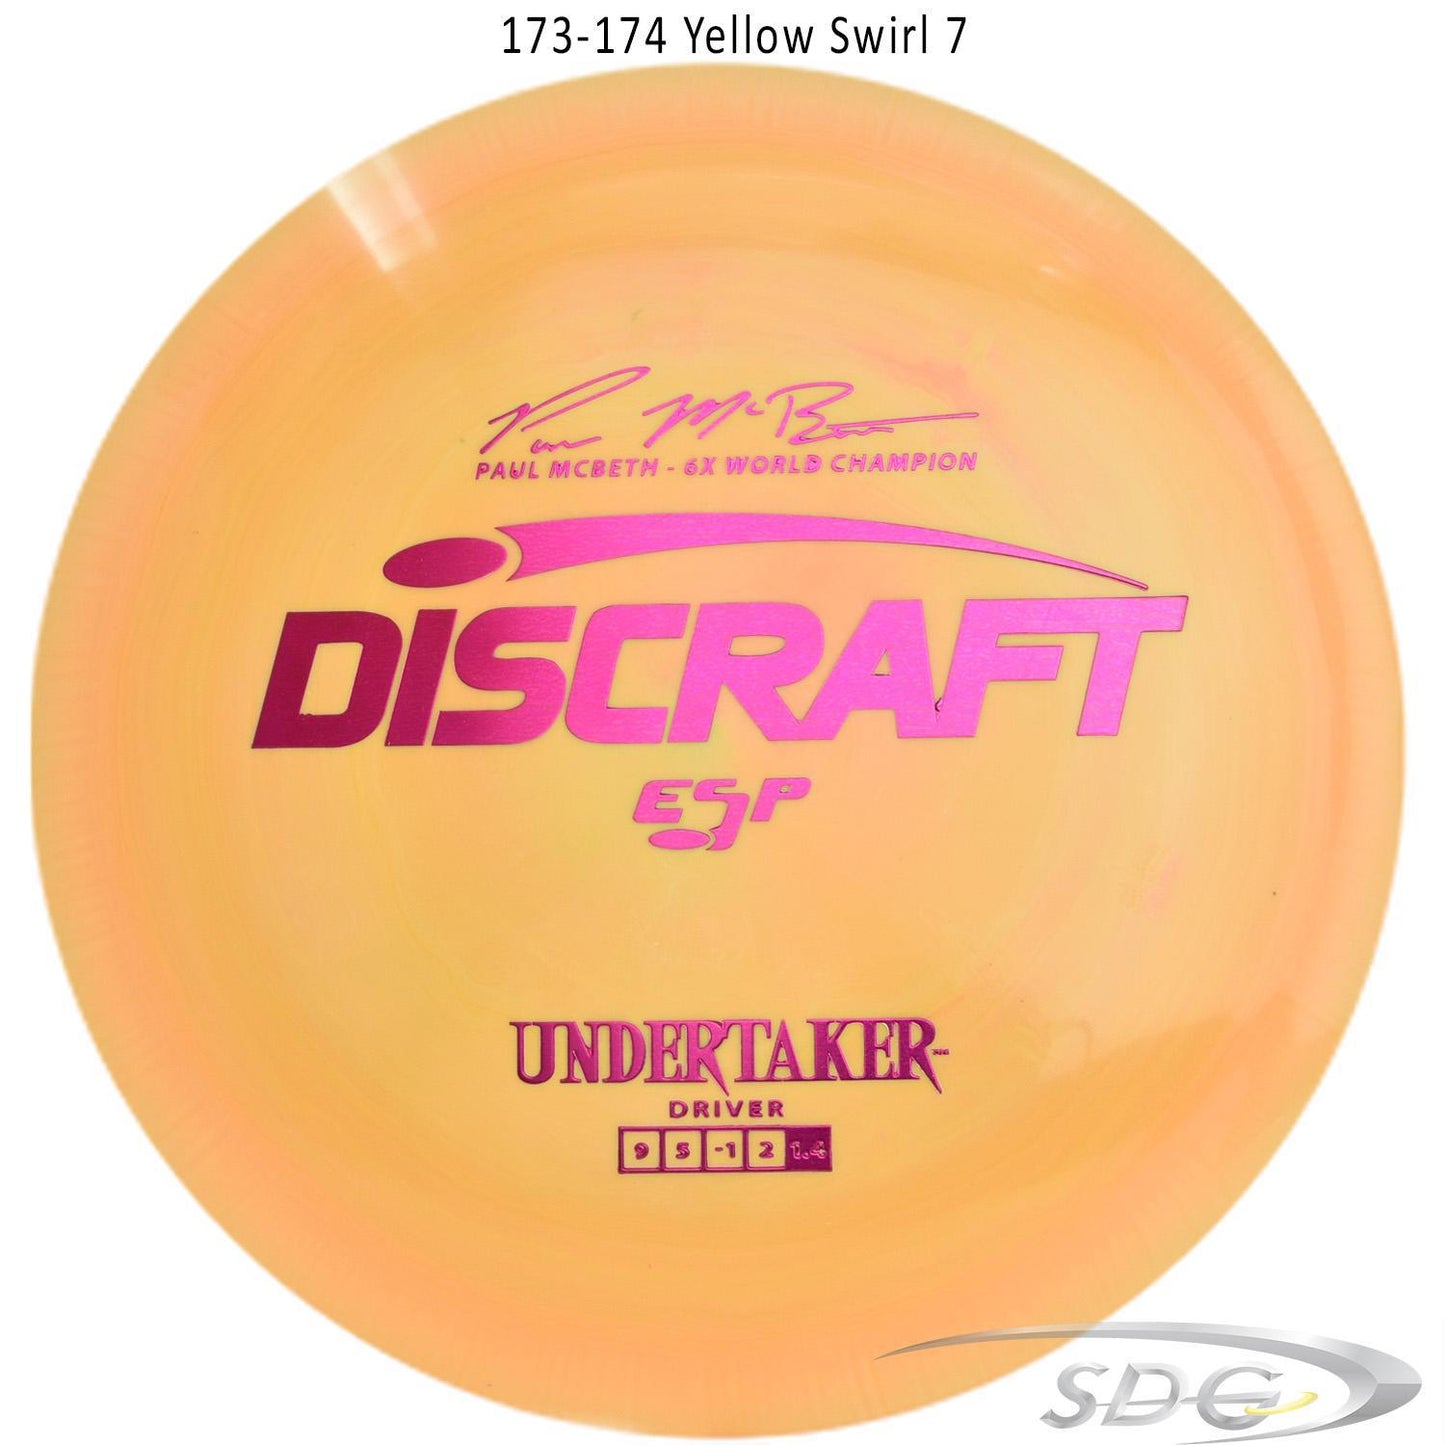 discraft-esp-undertaker-6x-paul-mcbeth-signature-series-disc-golf-distance-driver-1 173-174 Yellow Swirl 7 